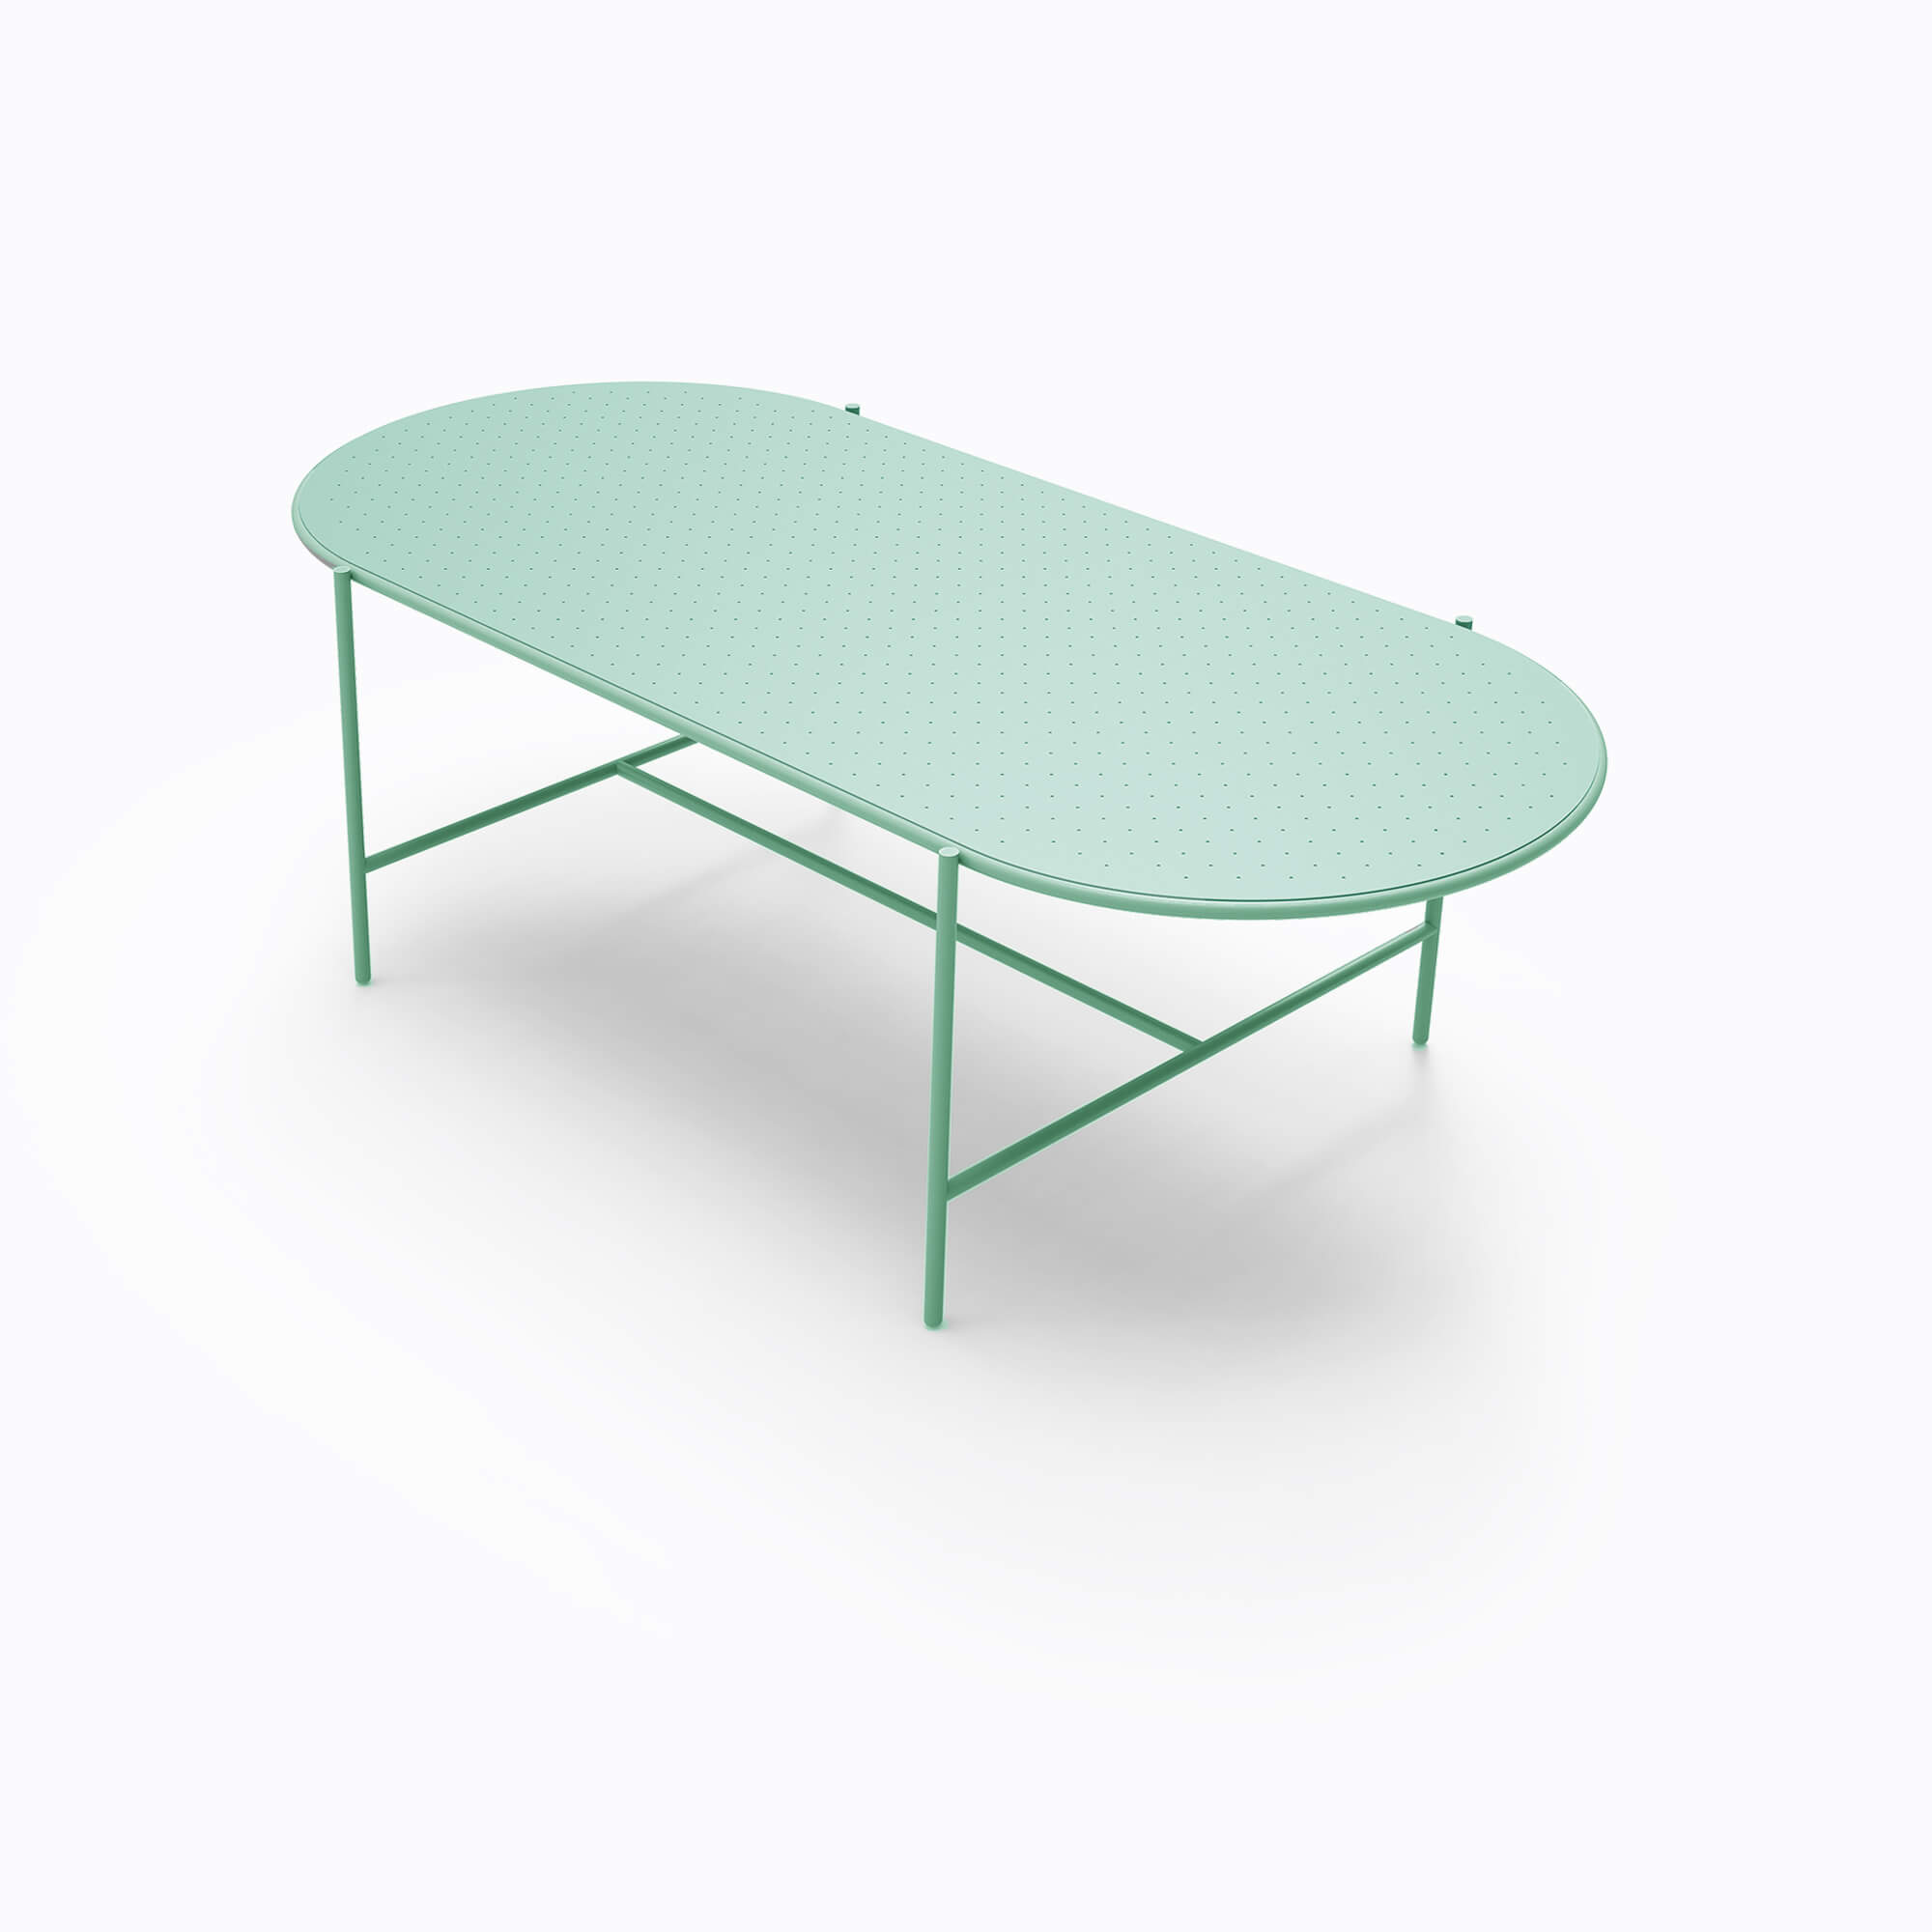 OUDOOR שולחן מתכת אלומיניום מנטה צבעוני 4 מושבים